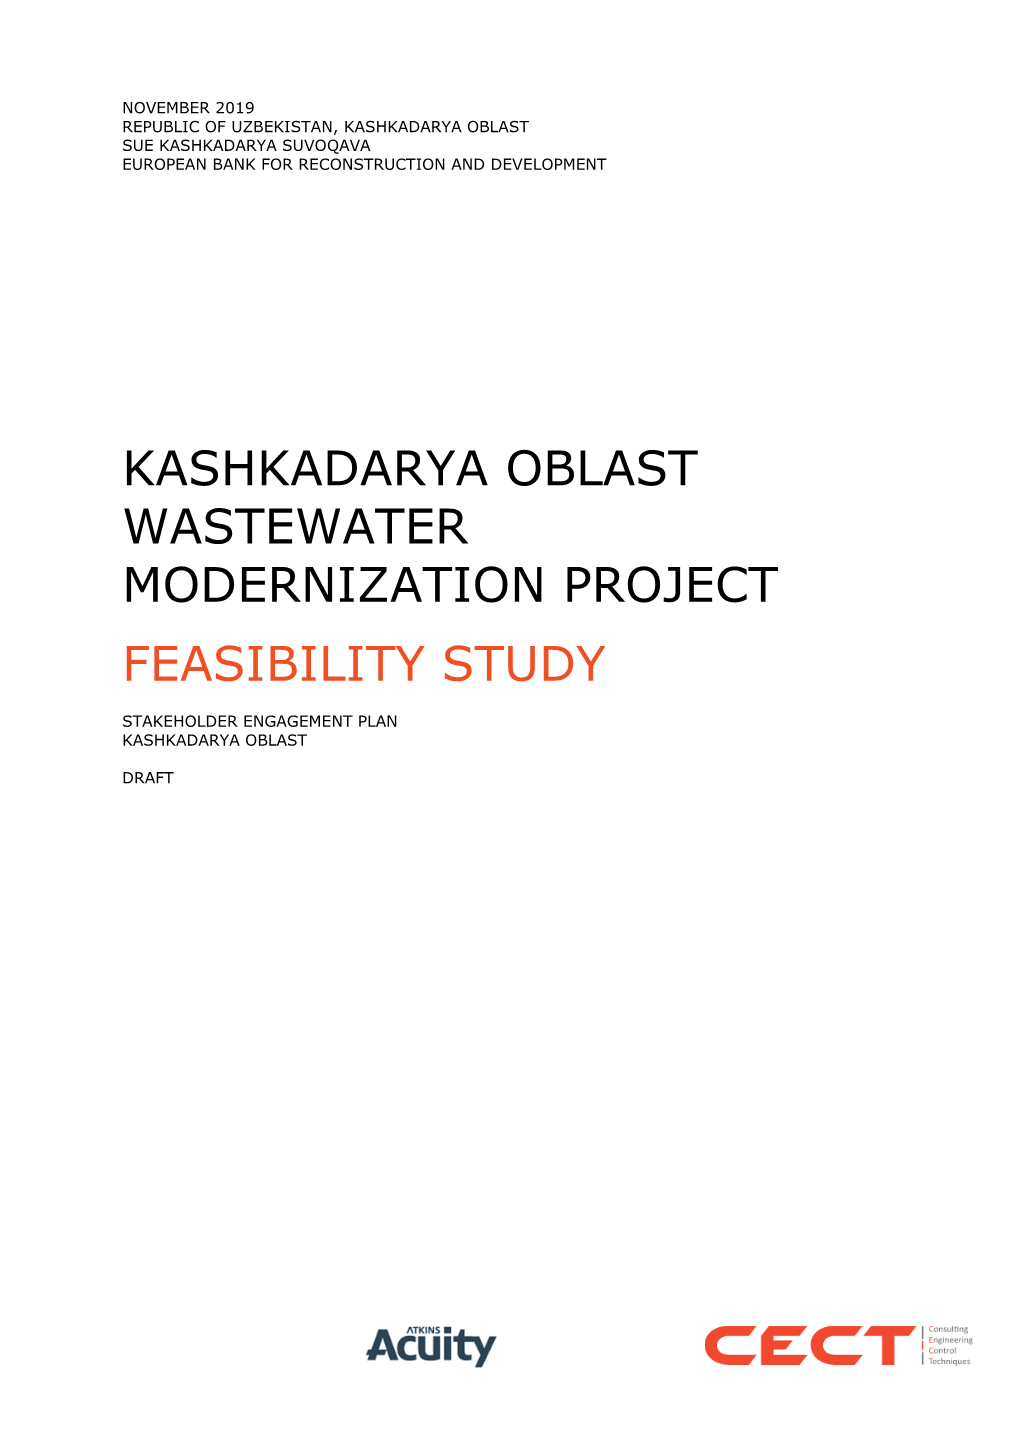 Kashkadarya Oblast Wastewater Modernization Project